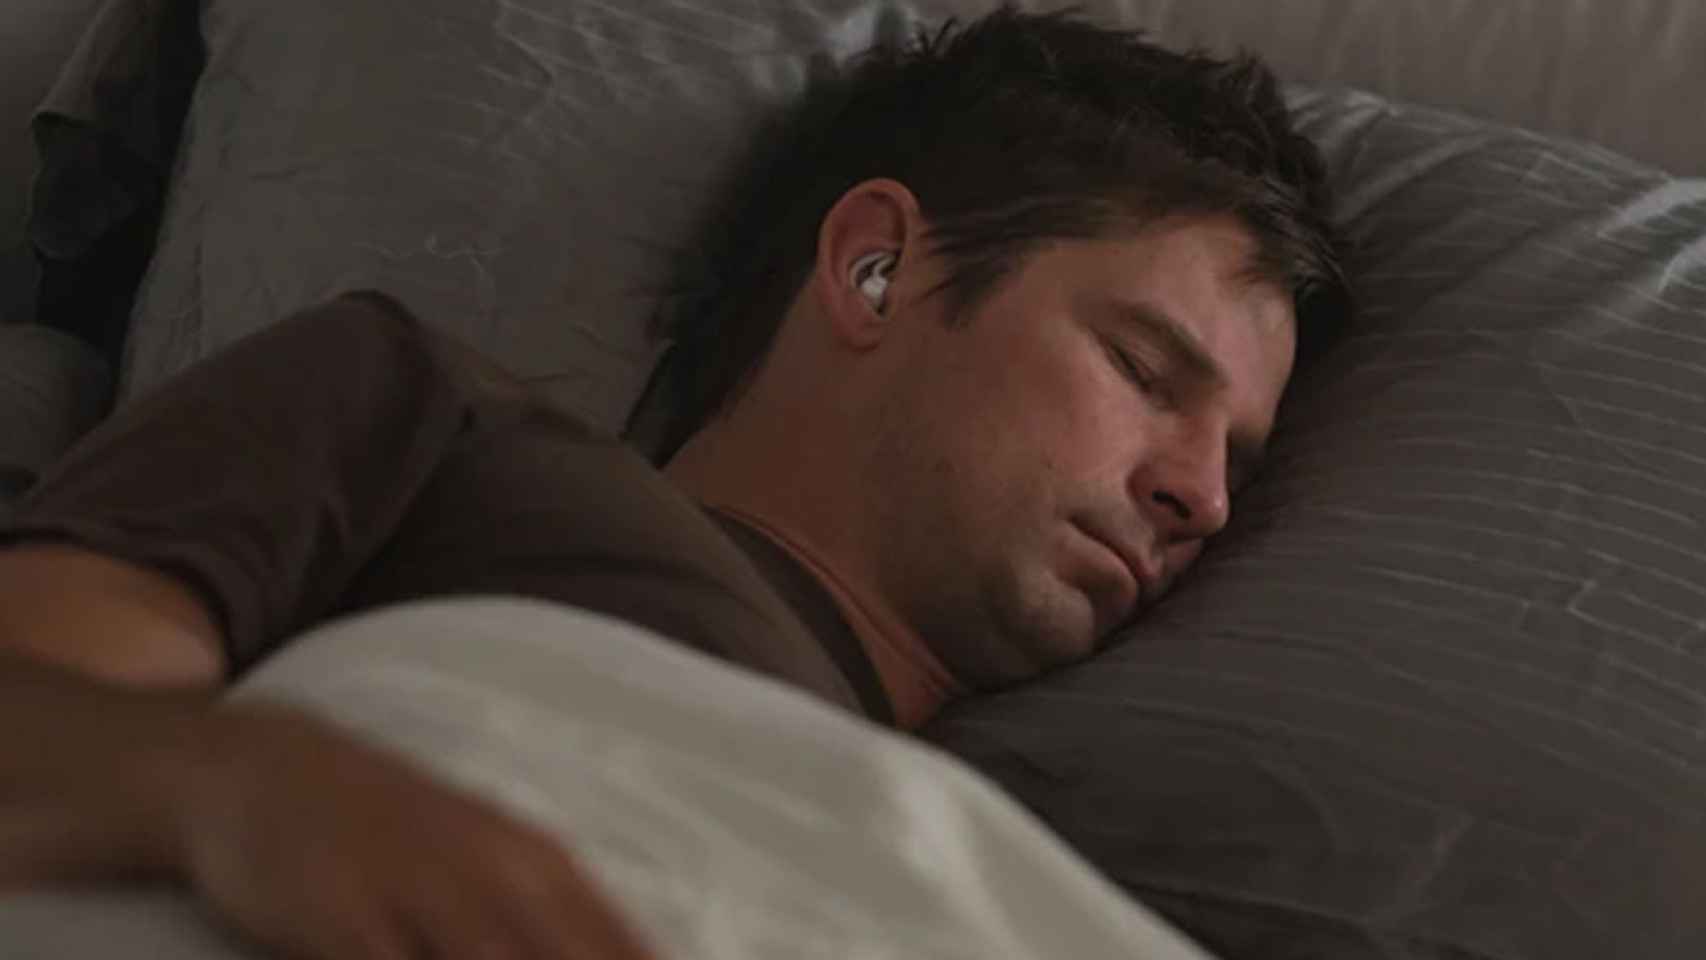 bose sleepbuds auriculares para dormir destacada